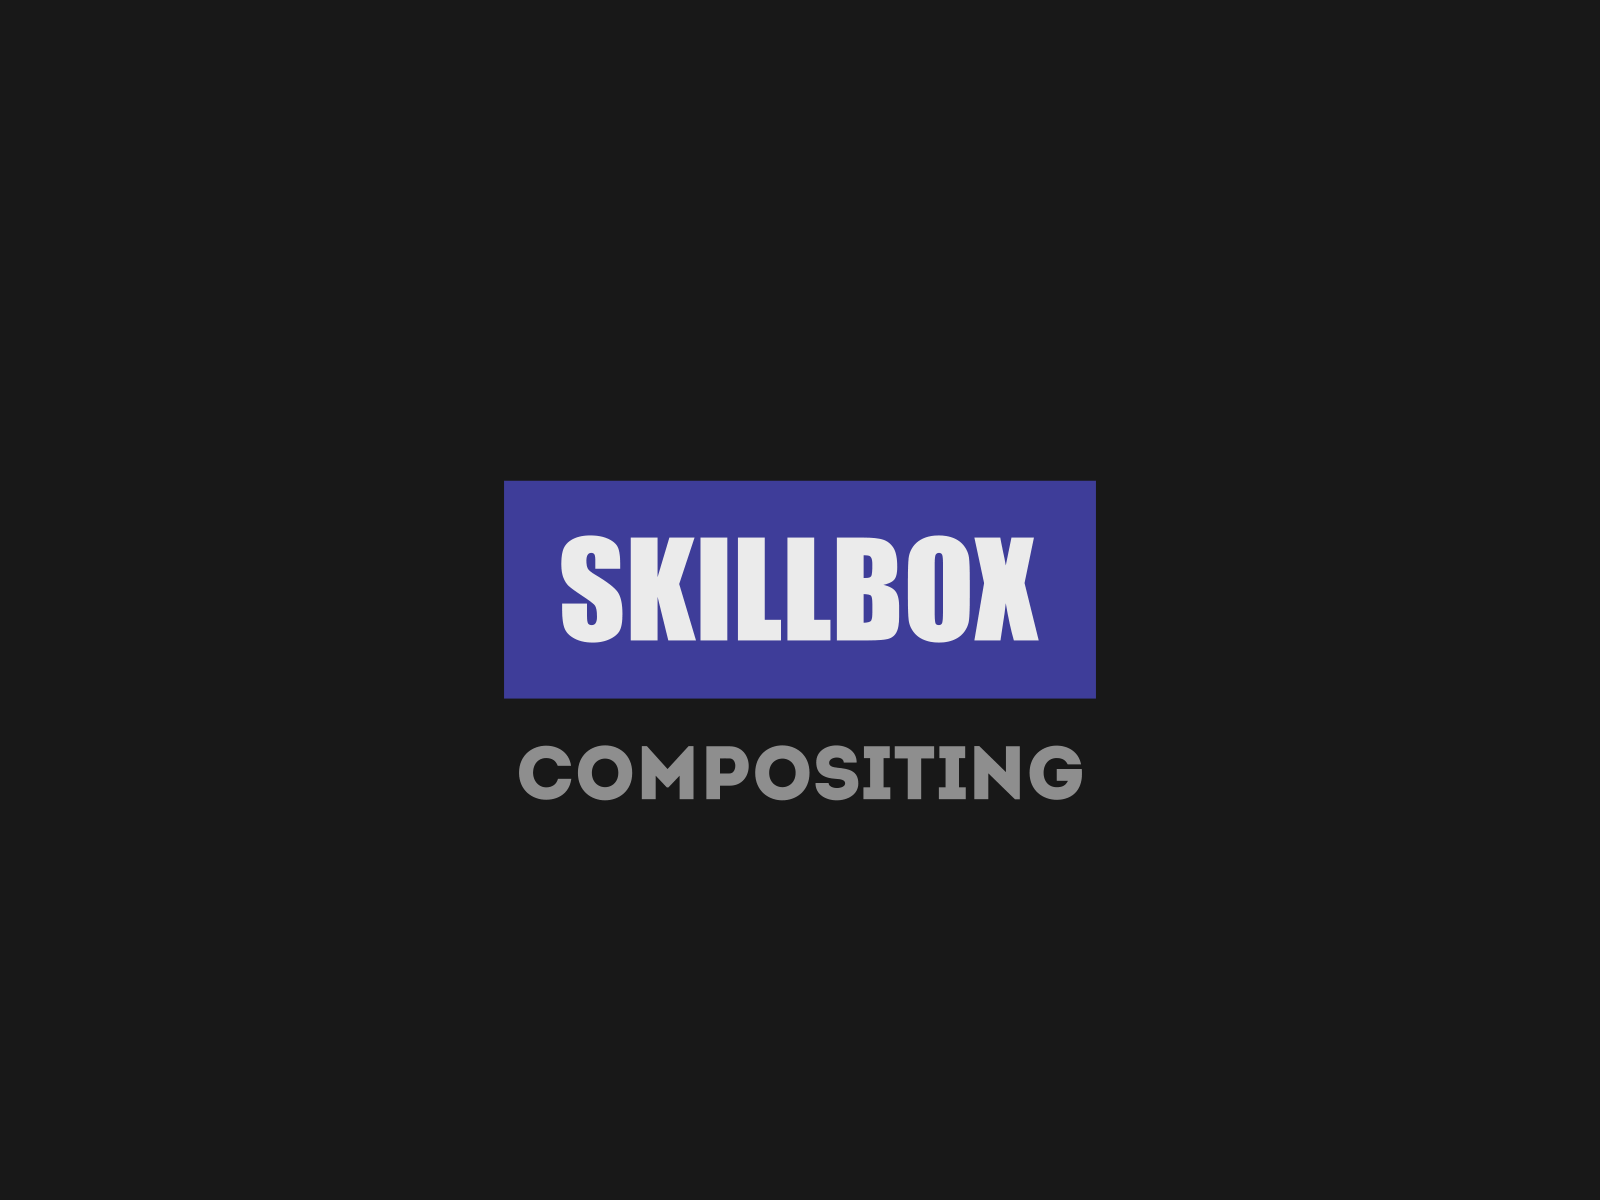 Skillbox - Compositing